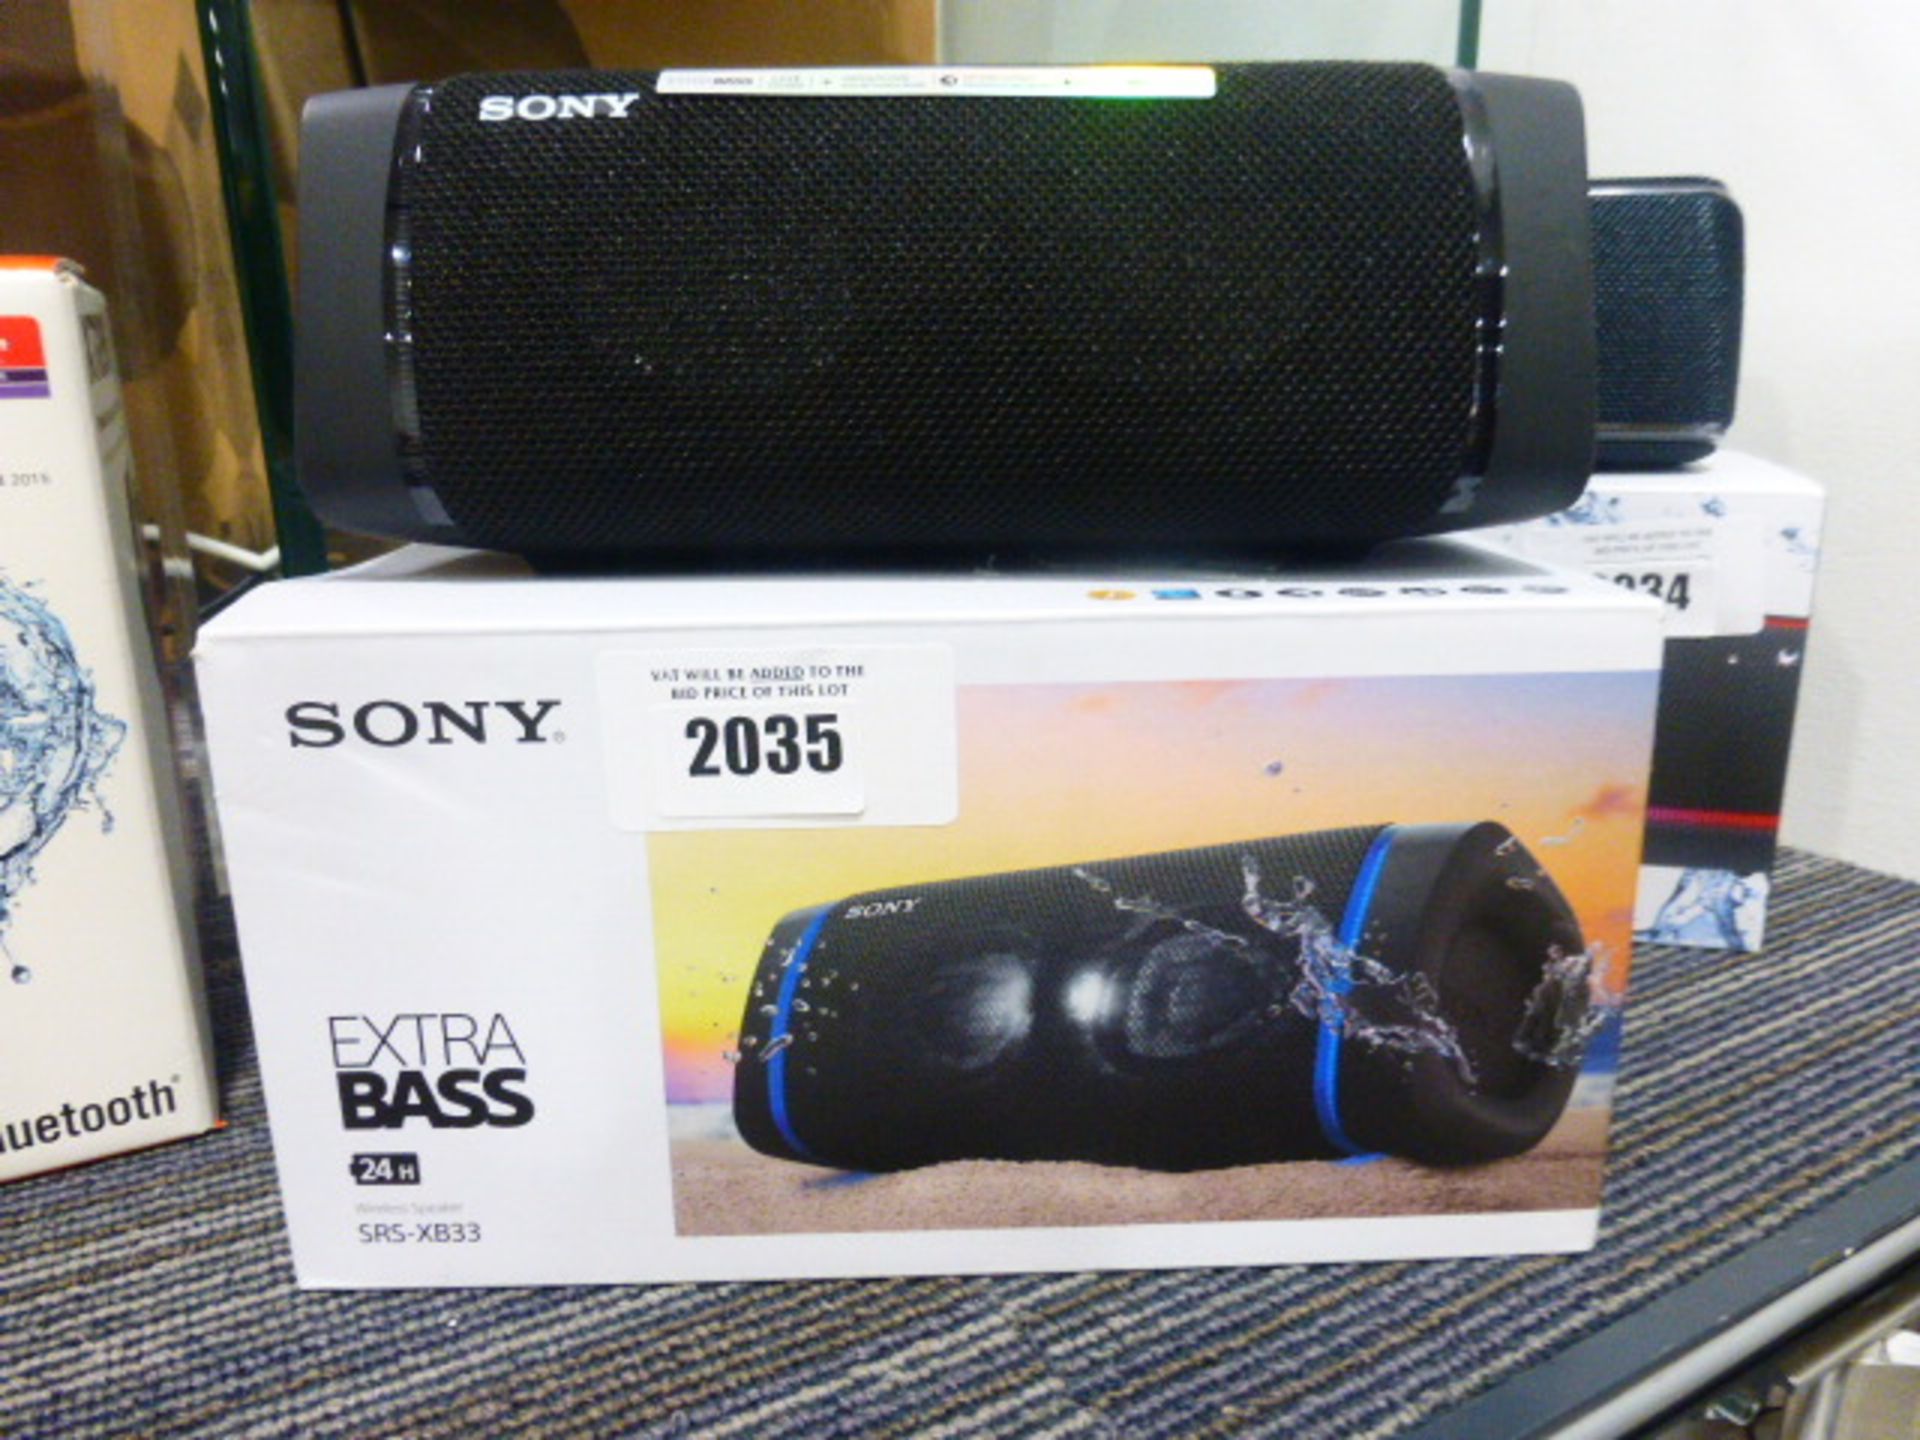 Sony SRS-XB33 Bluetooth speaker with box